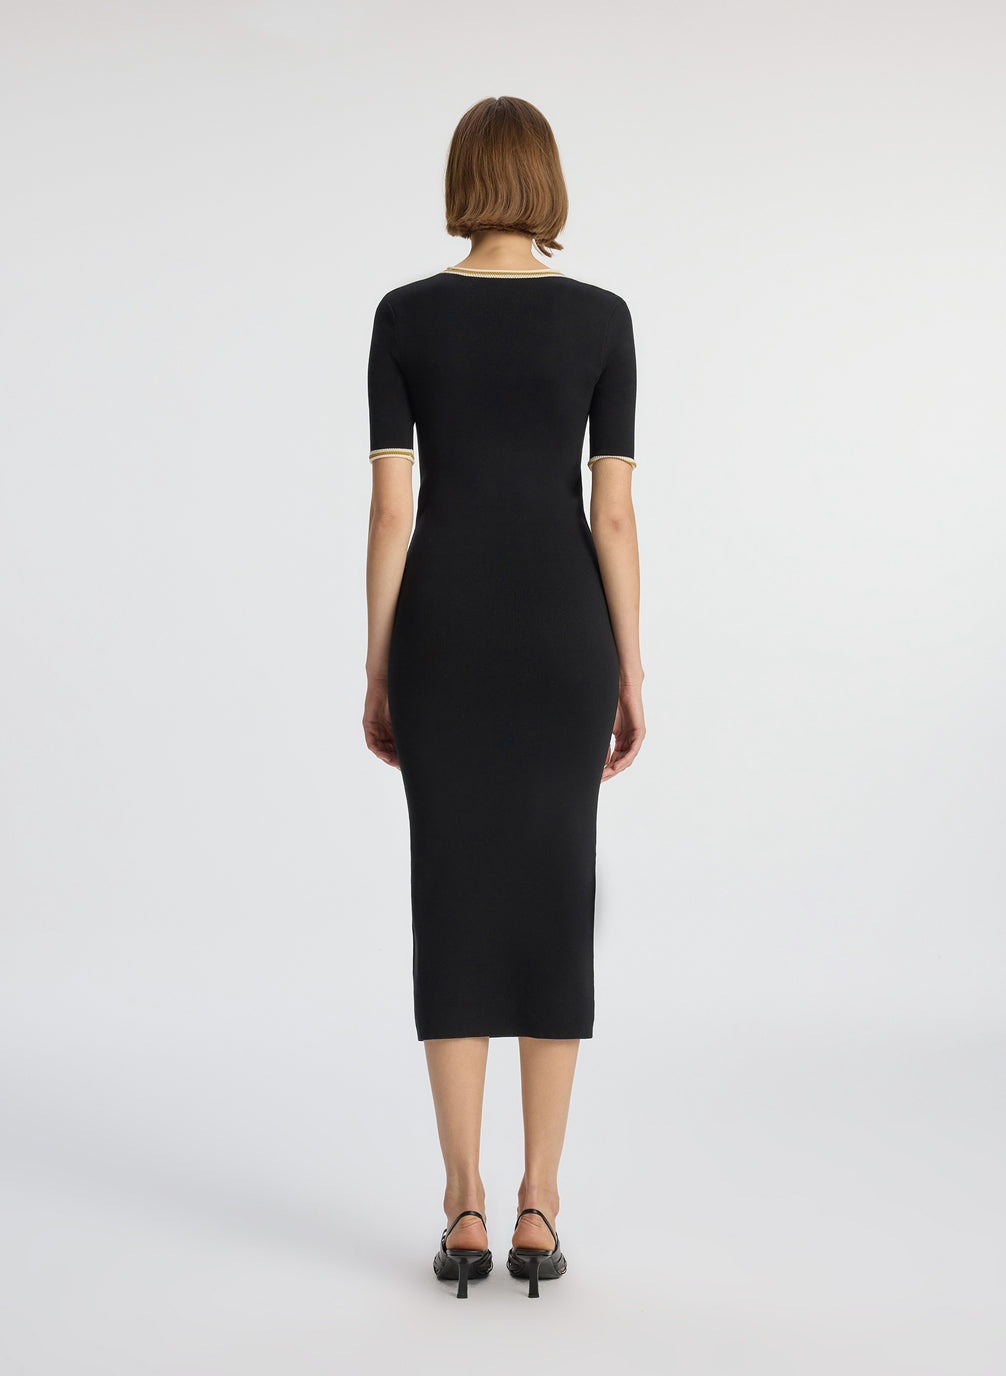 back view of woman wearing black short sleeve midi dress